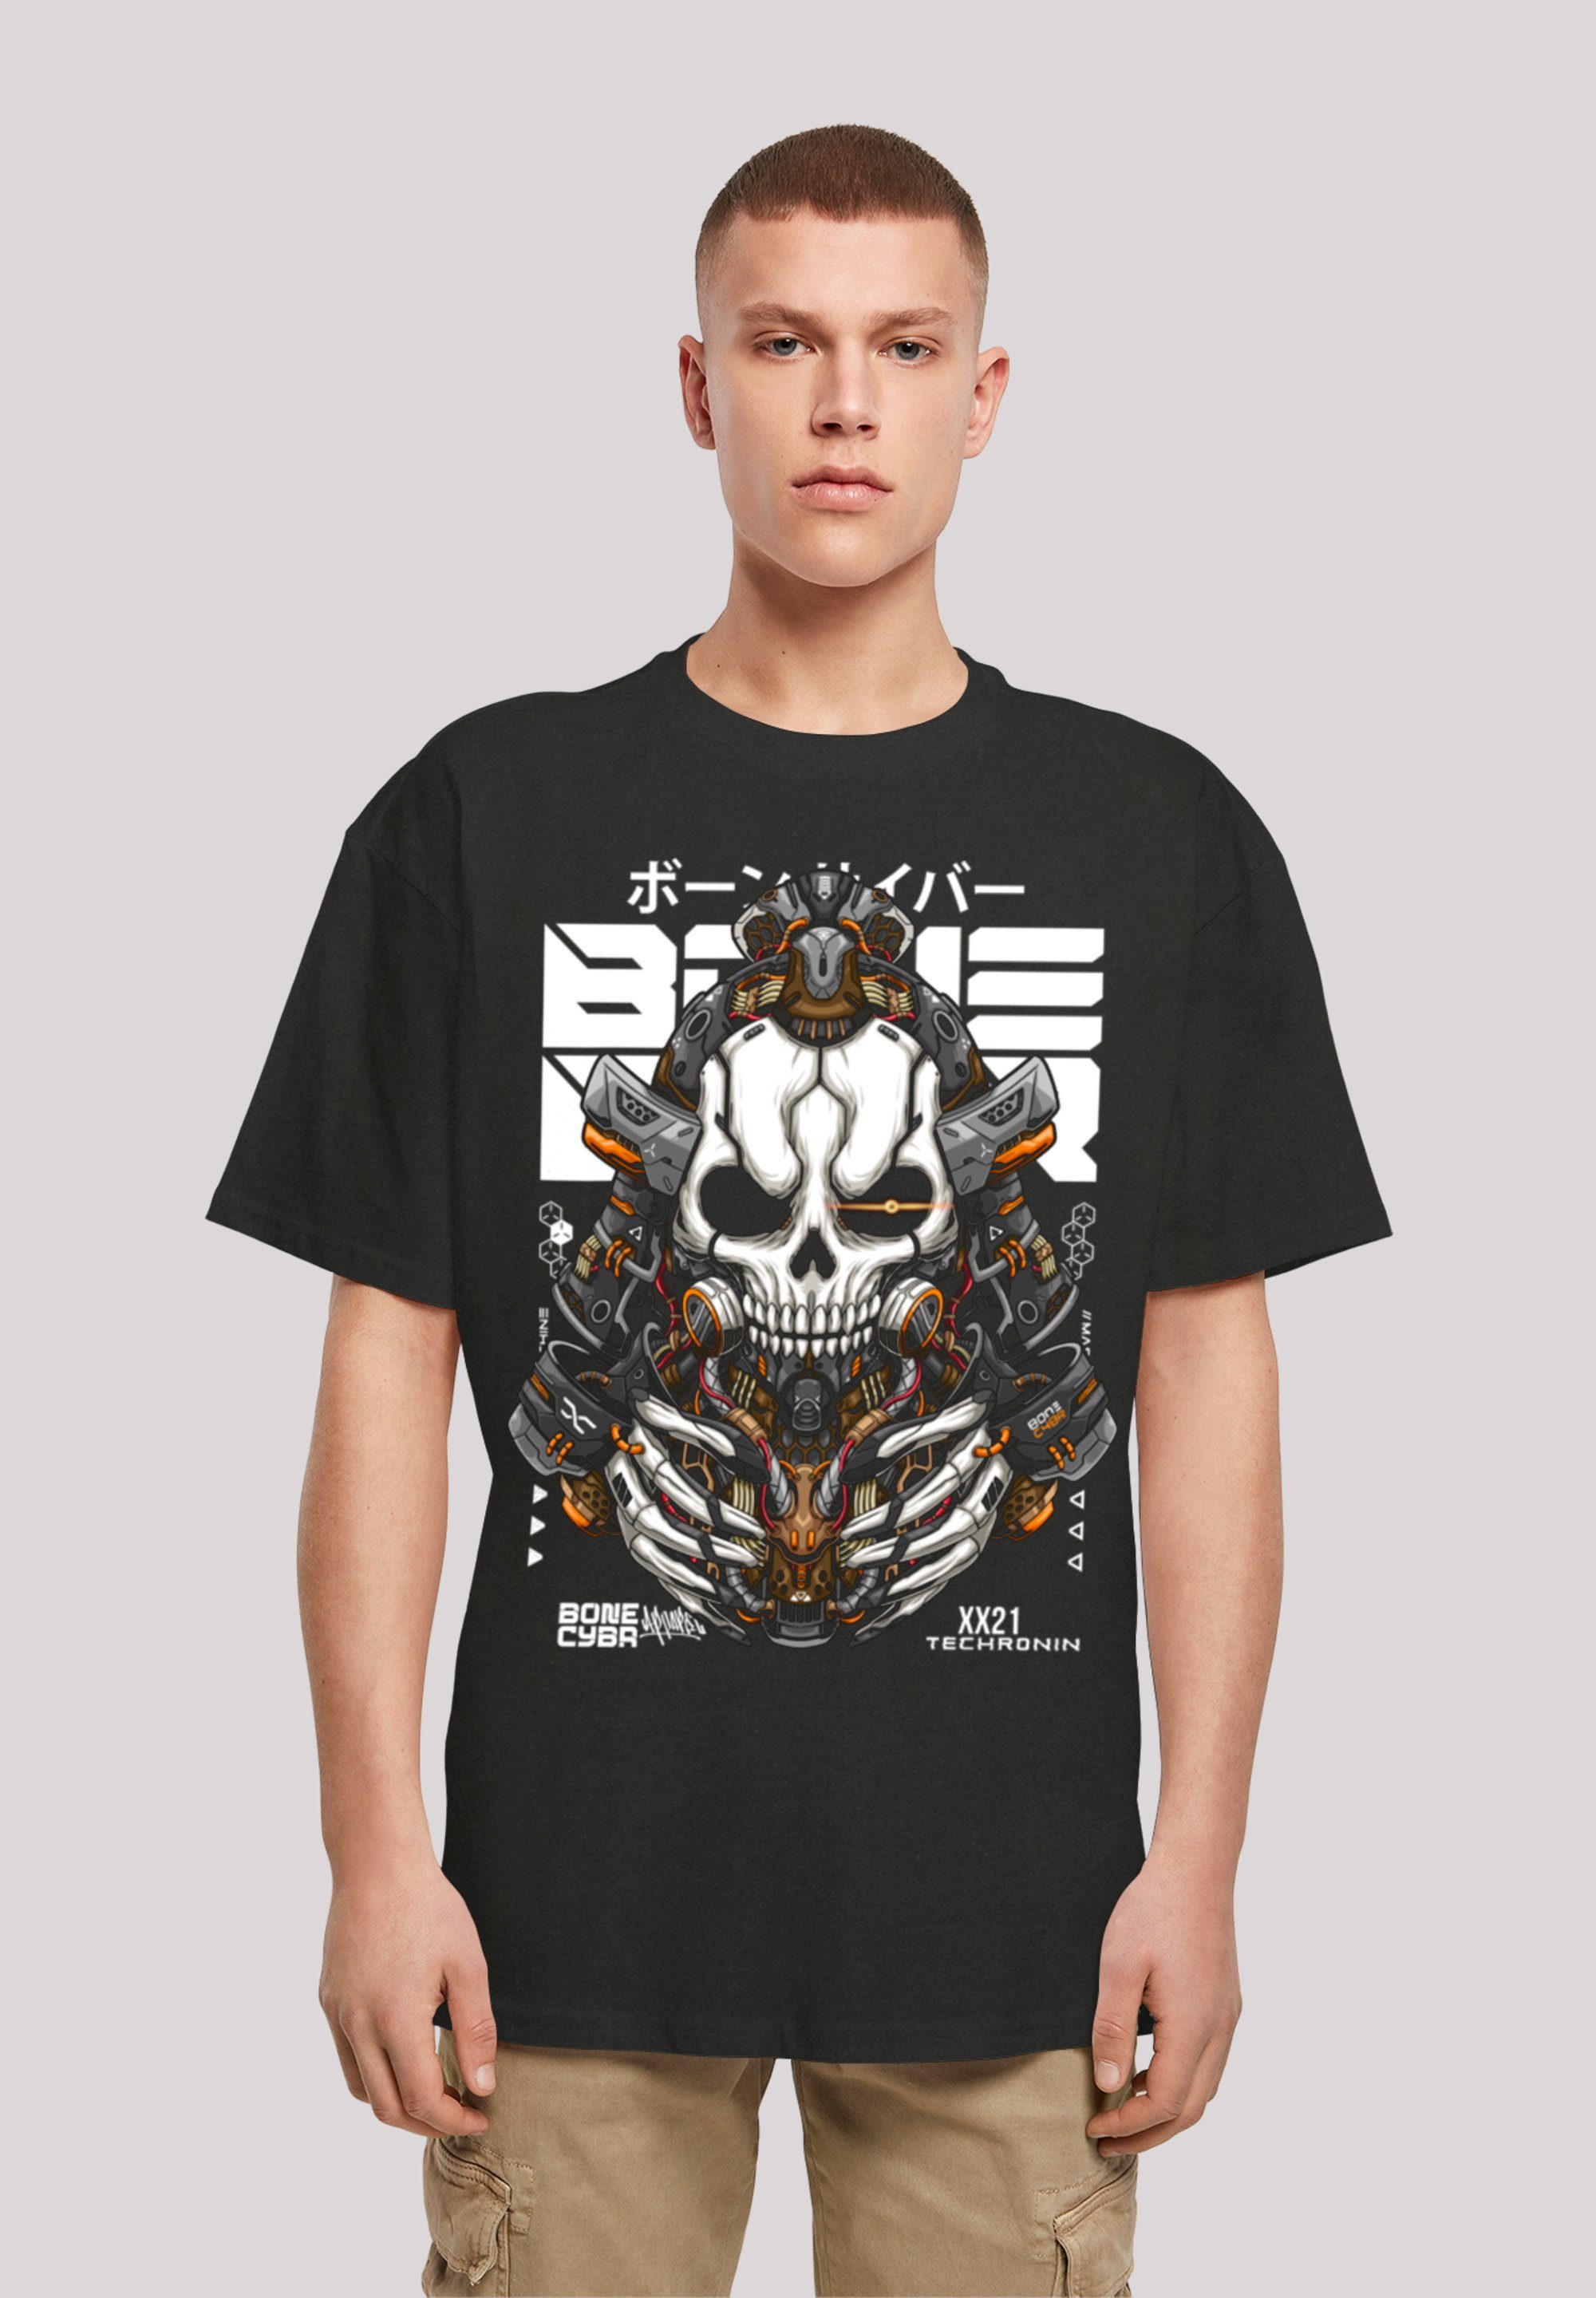 Techronin Print schwarz F4NT4STIC T-Shirt STYLES Cyber Bone CYBERPUNK